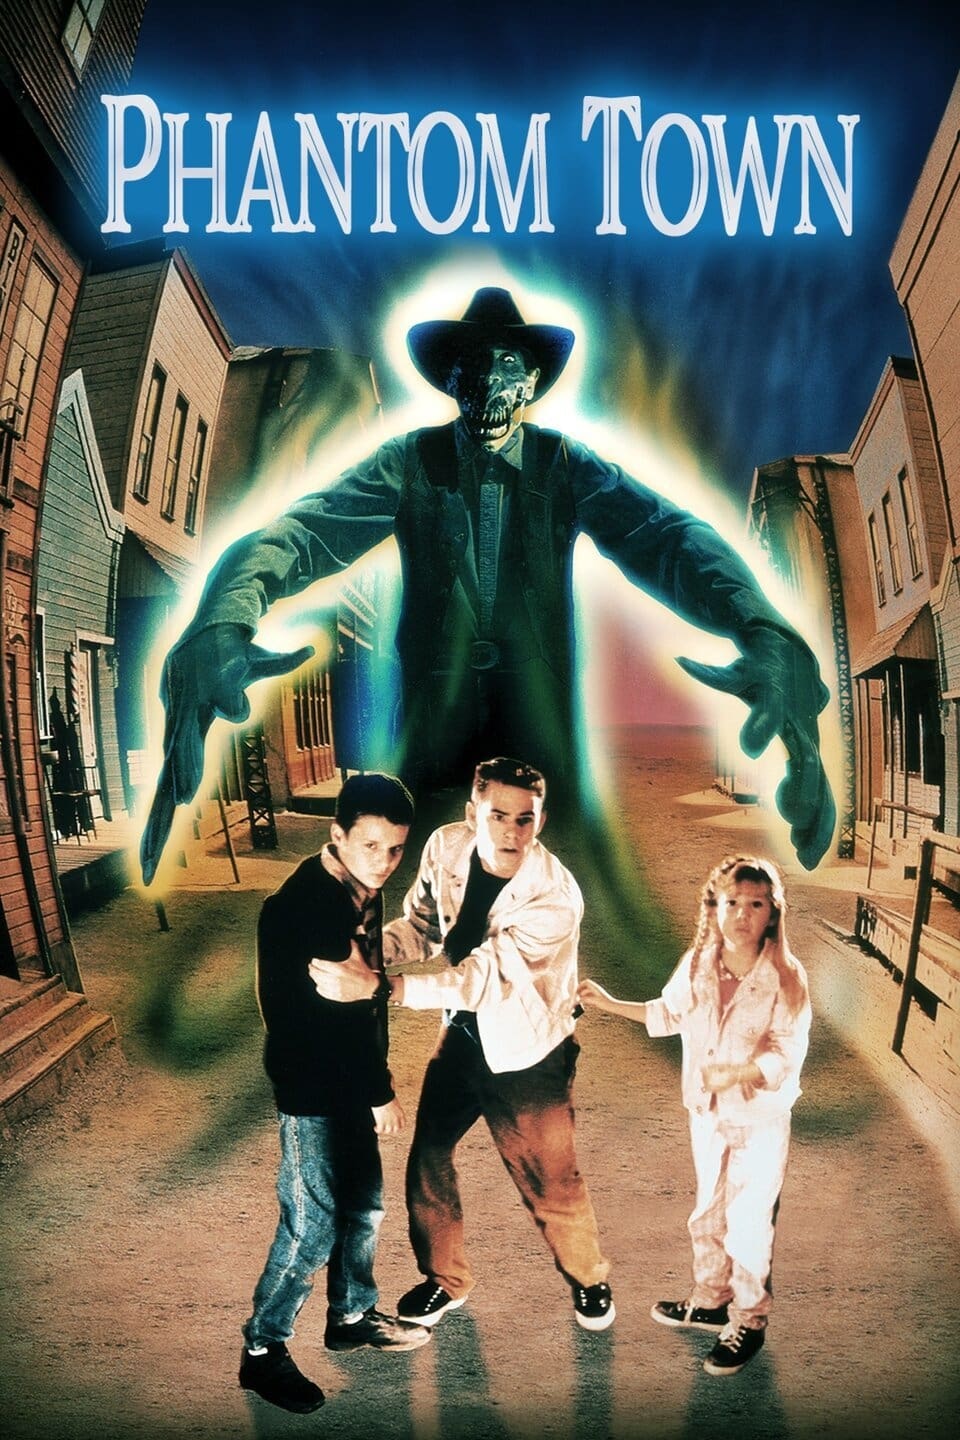 Spooky Town (1999)